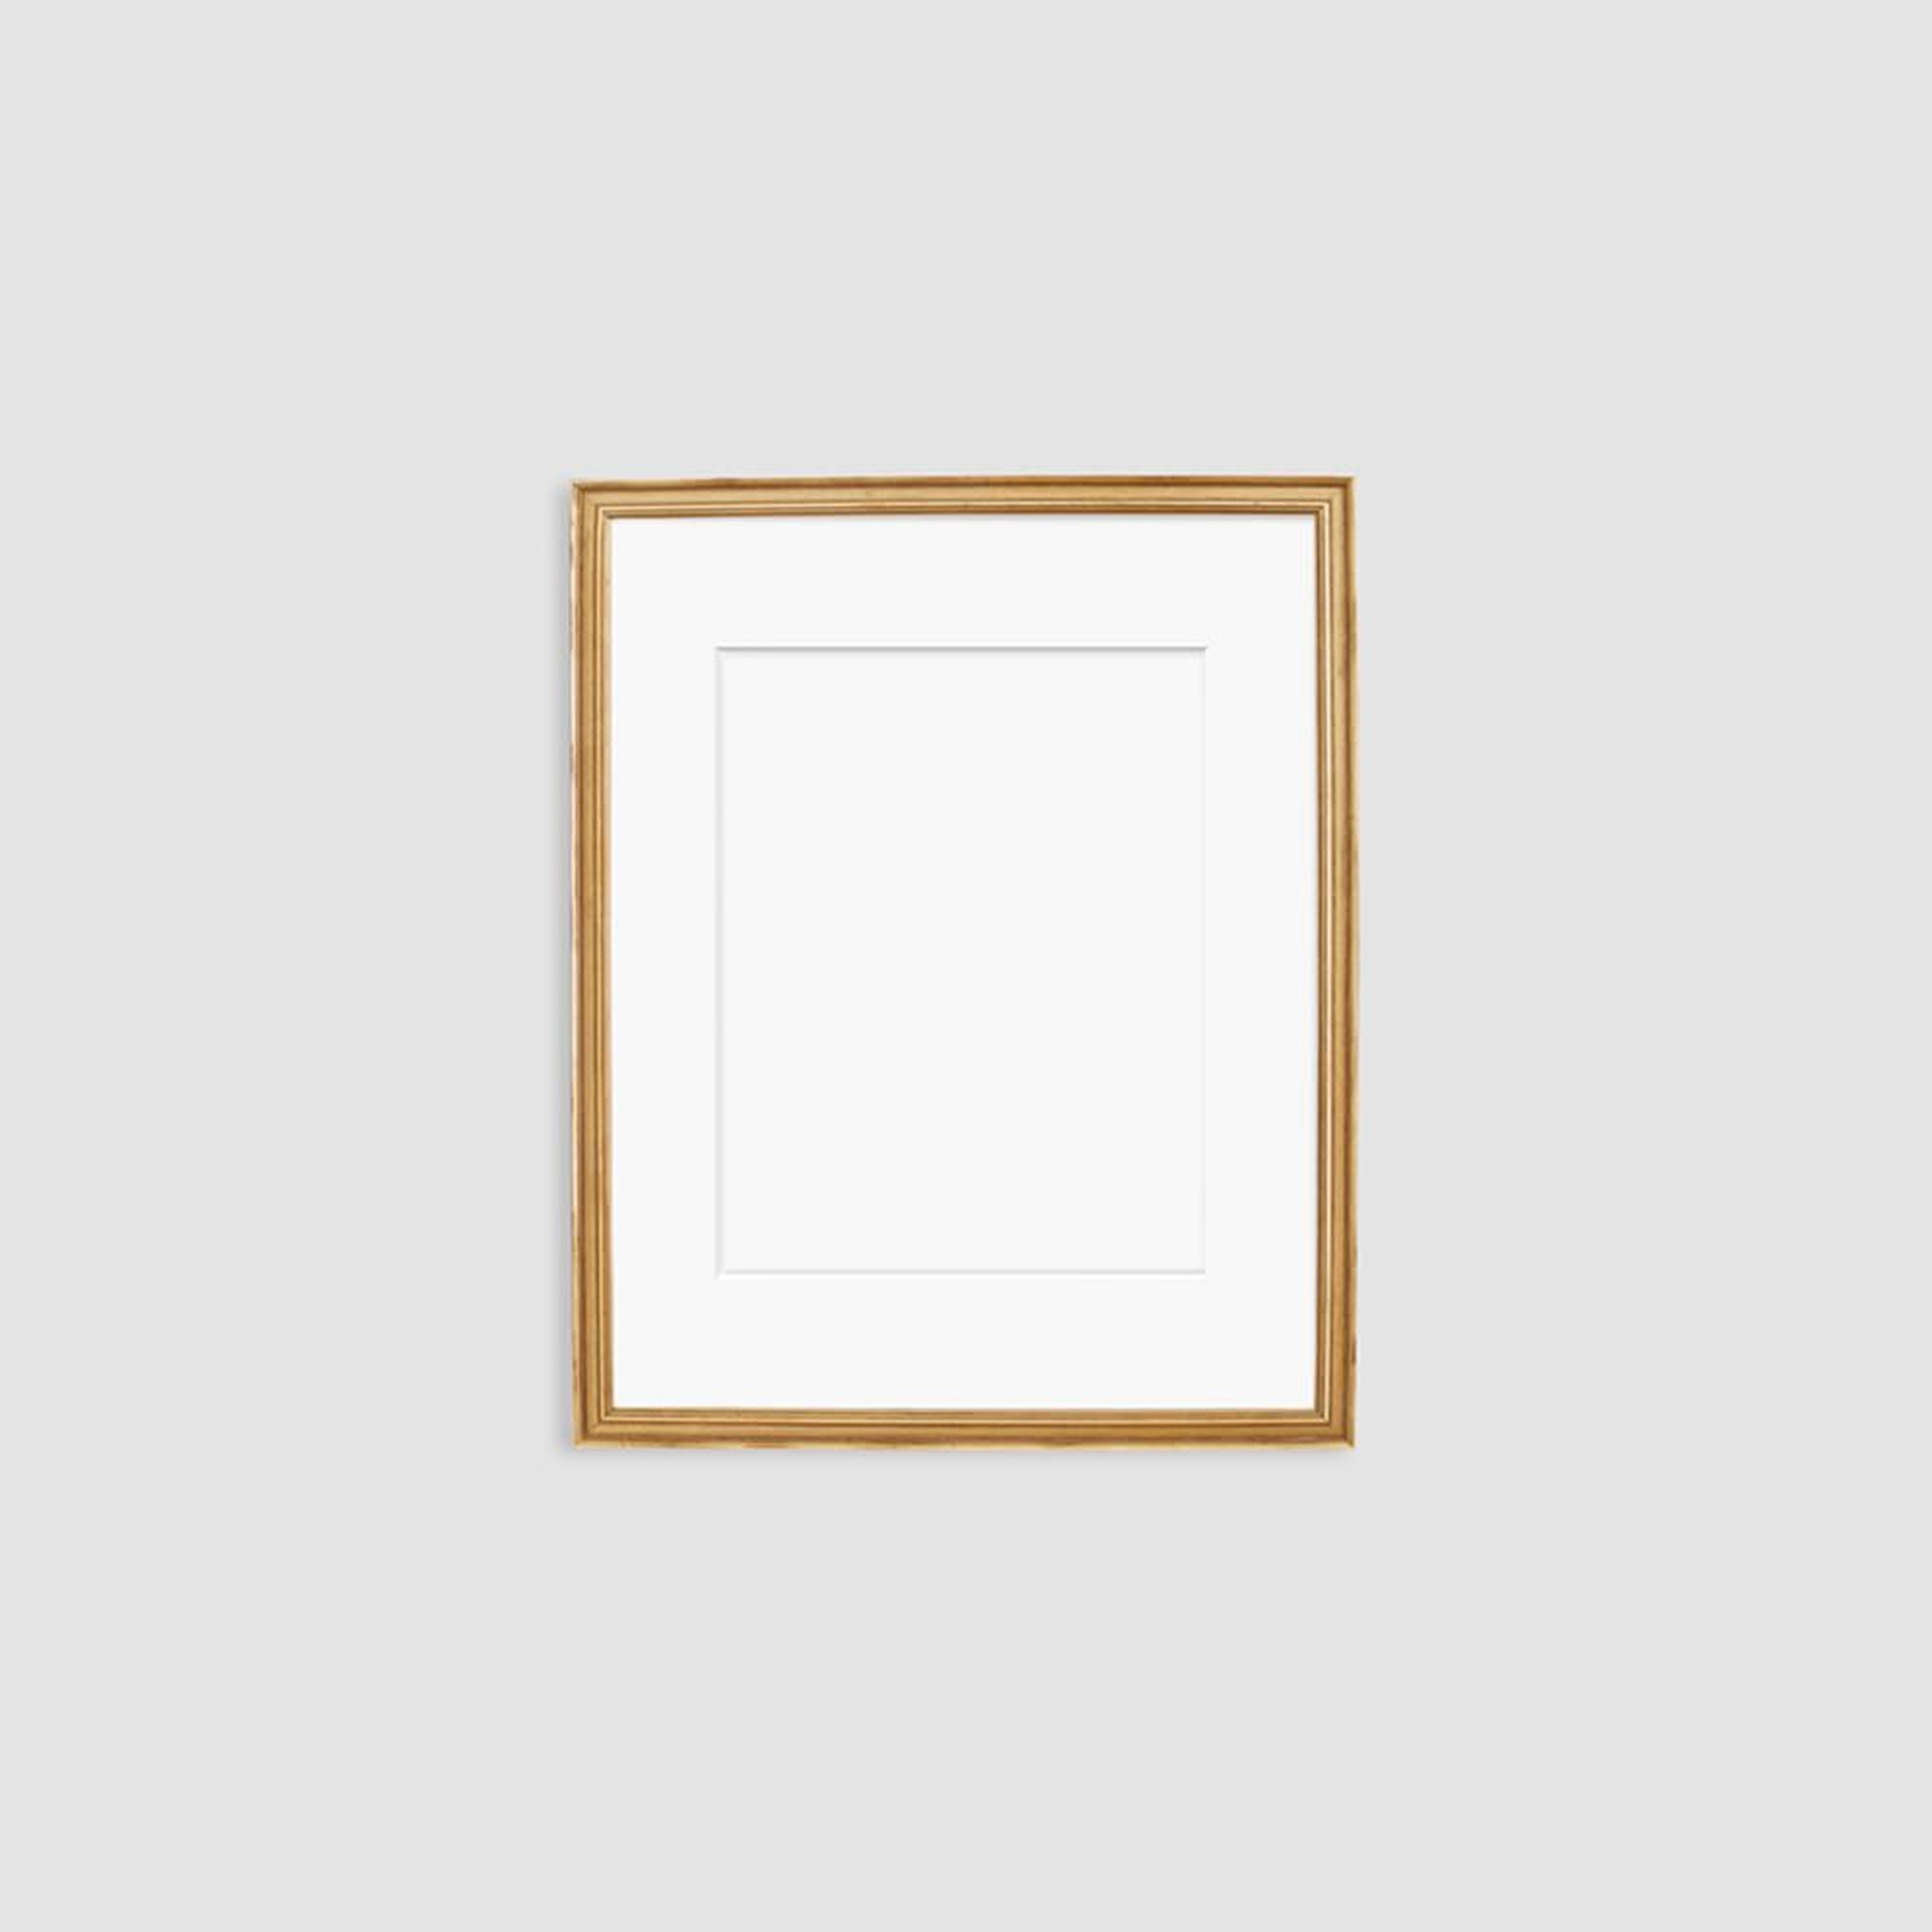 Simply Framed Gallery Frame, Antique Gold/Mat, 16"X20" - West Elm